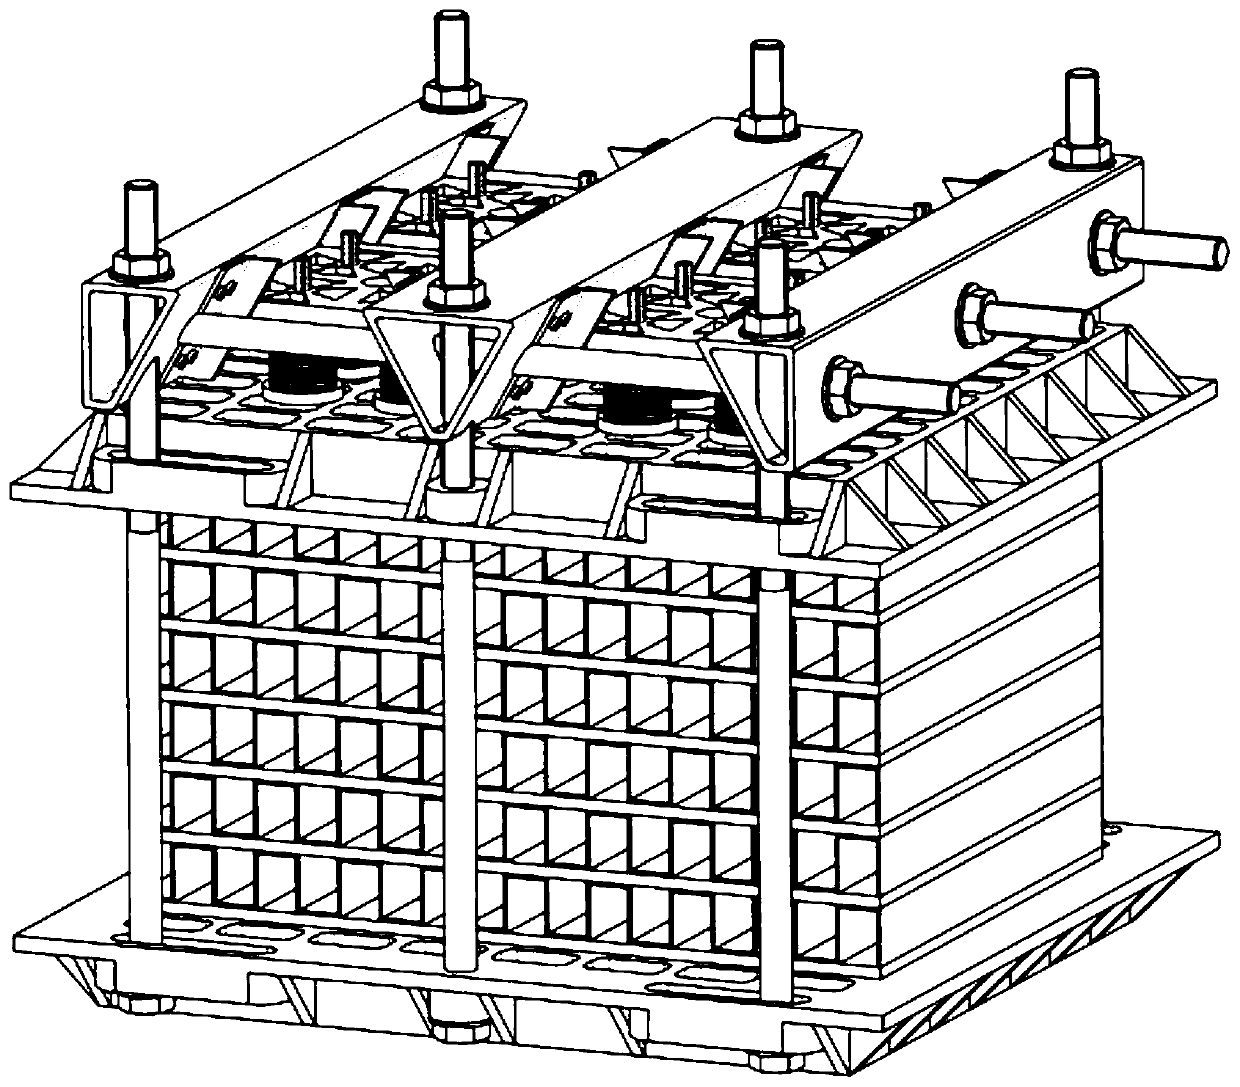 A brazing fixture for plate-fin heat exchanger